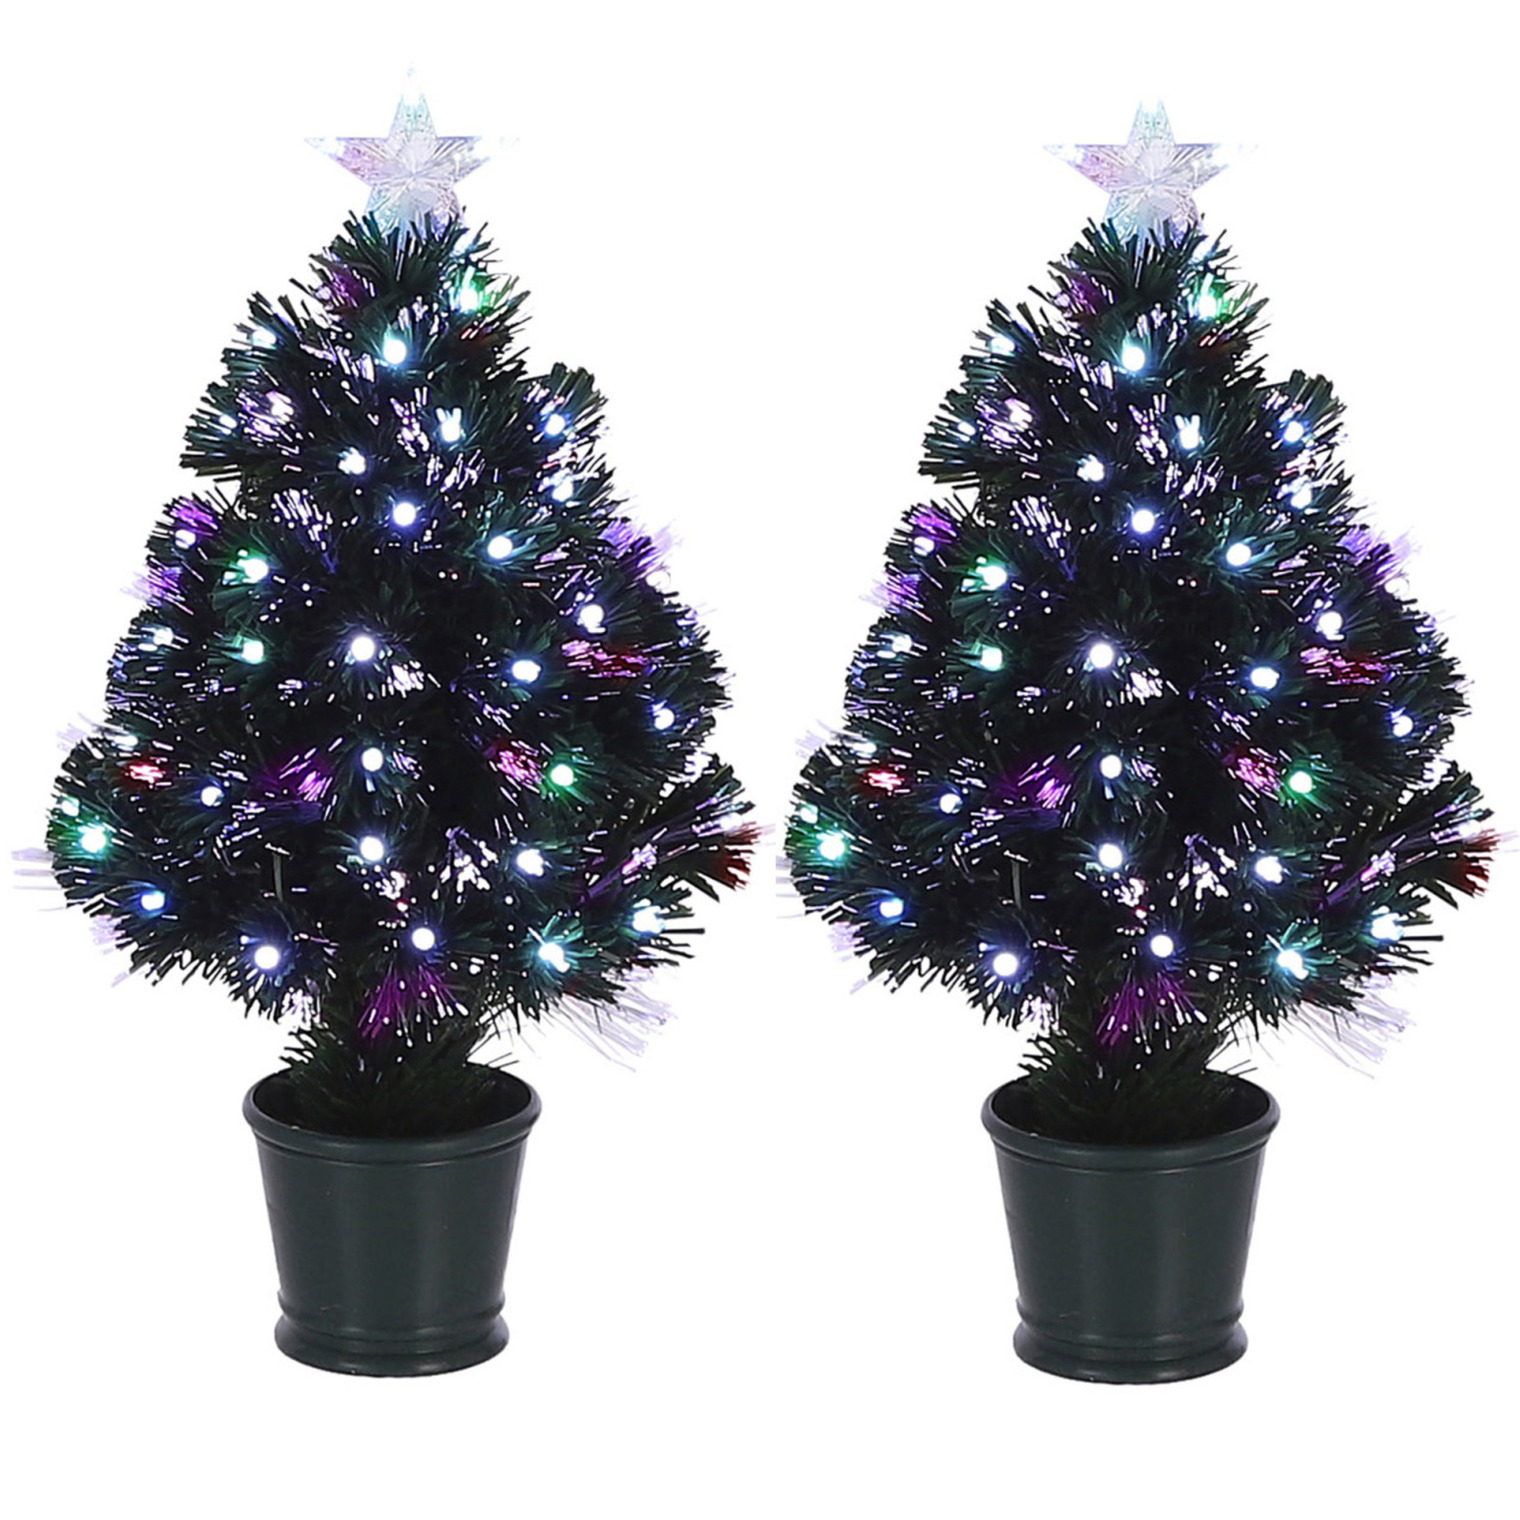 2x Fiber optic kerstboom-kunst kerstboom met knipperende verlichting en piek ster 60 cm